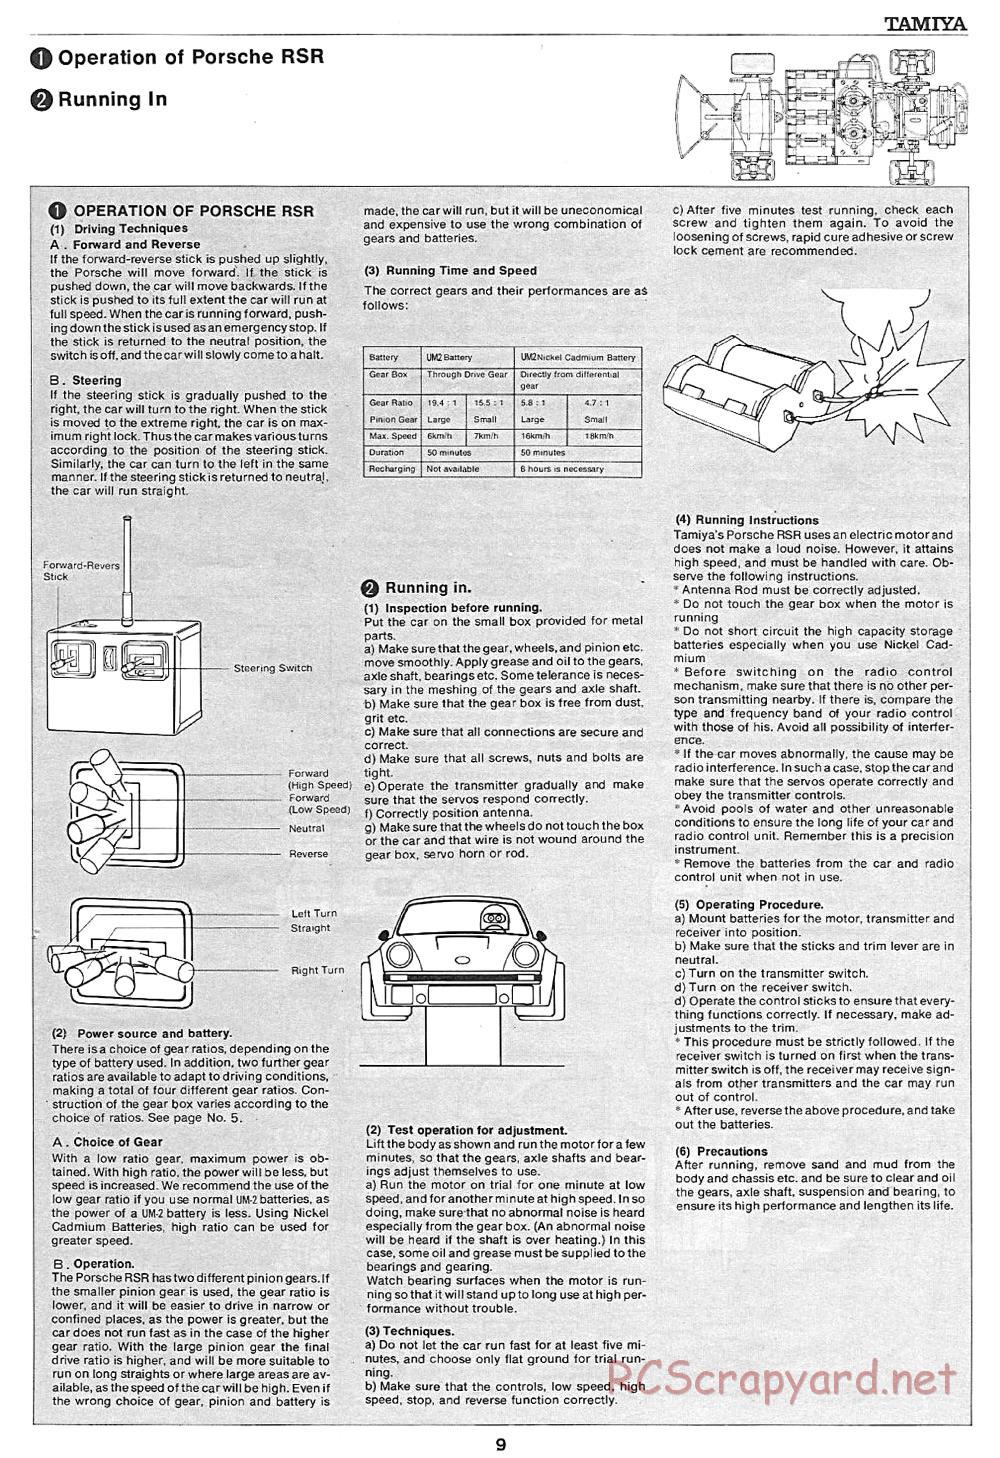 Tamiya - Porsche 934 Turbo RSR - 58001 - Manual - Page 9